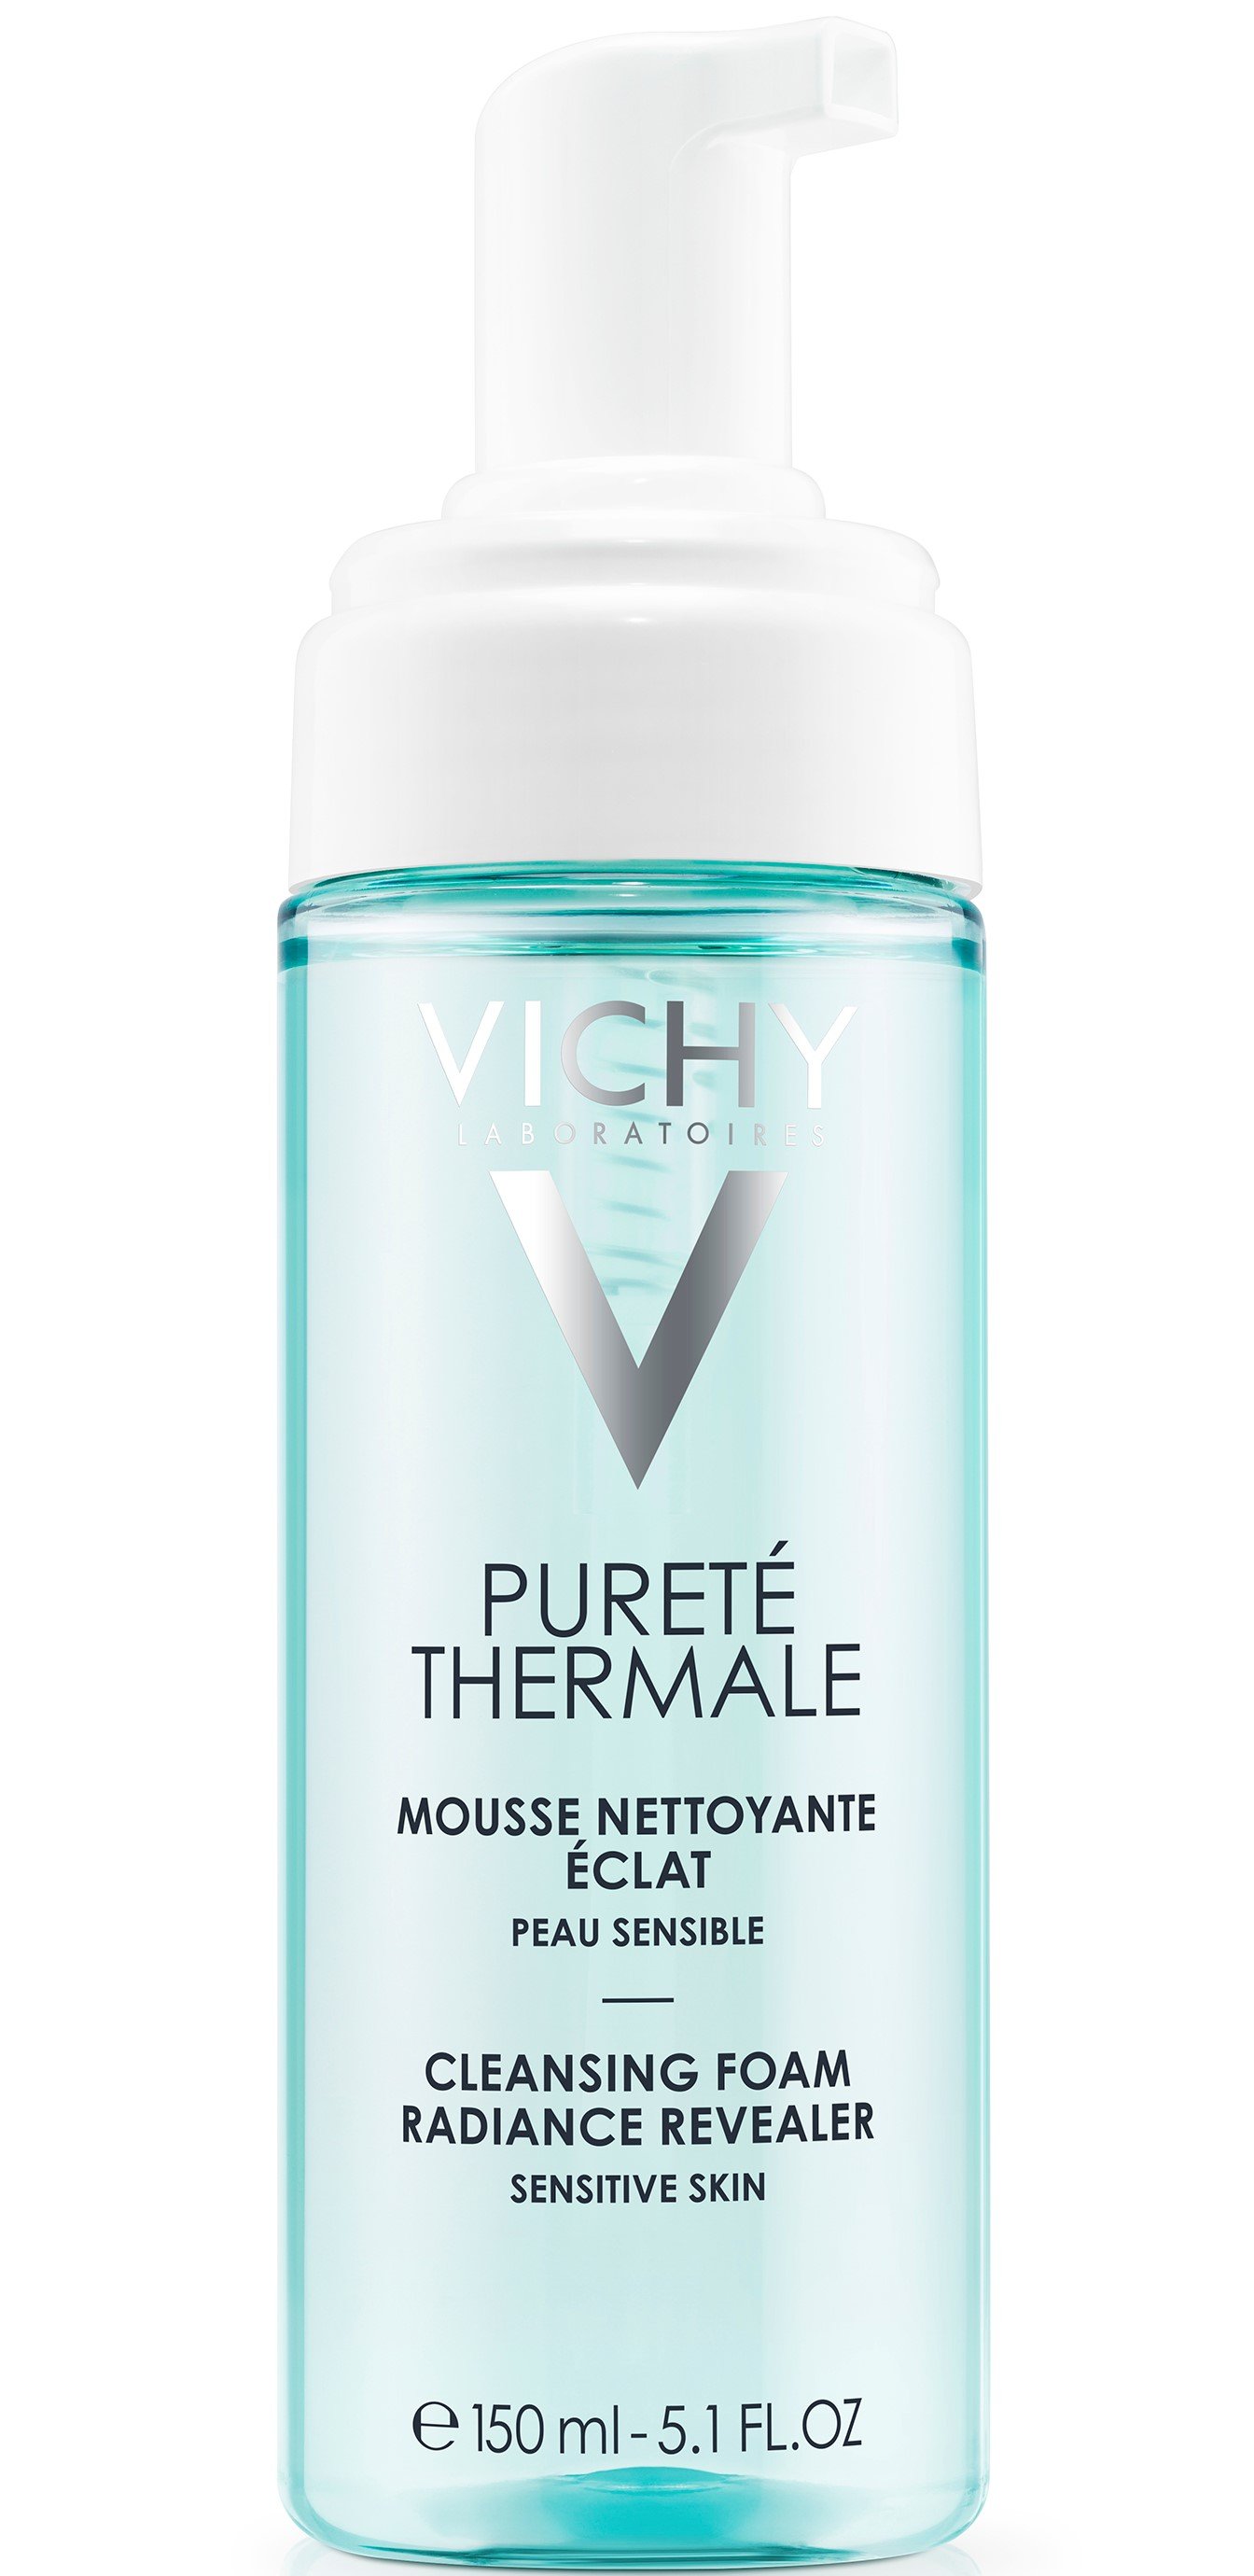 Пенка для умывания Vichy Purete Thermale, для всех типов кожи, 150 мл - фото 2